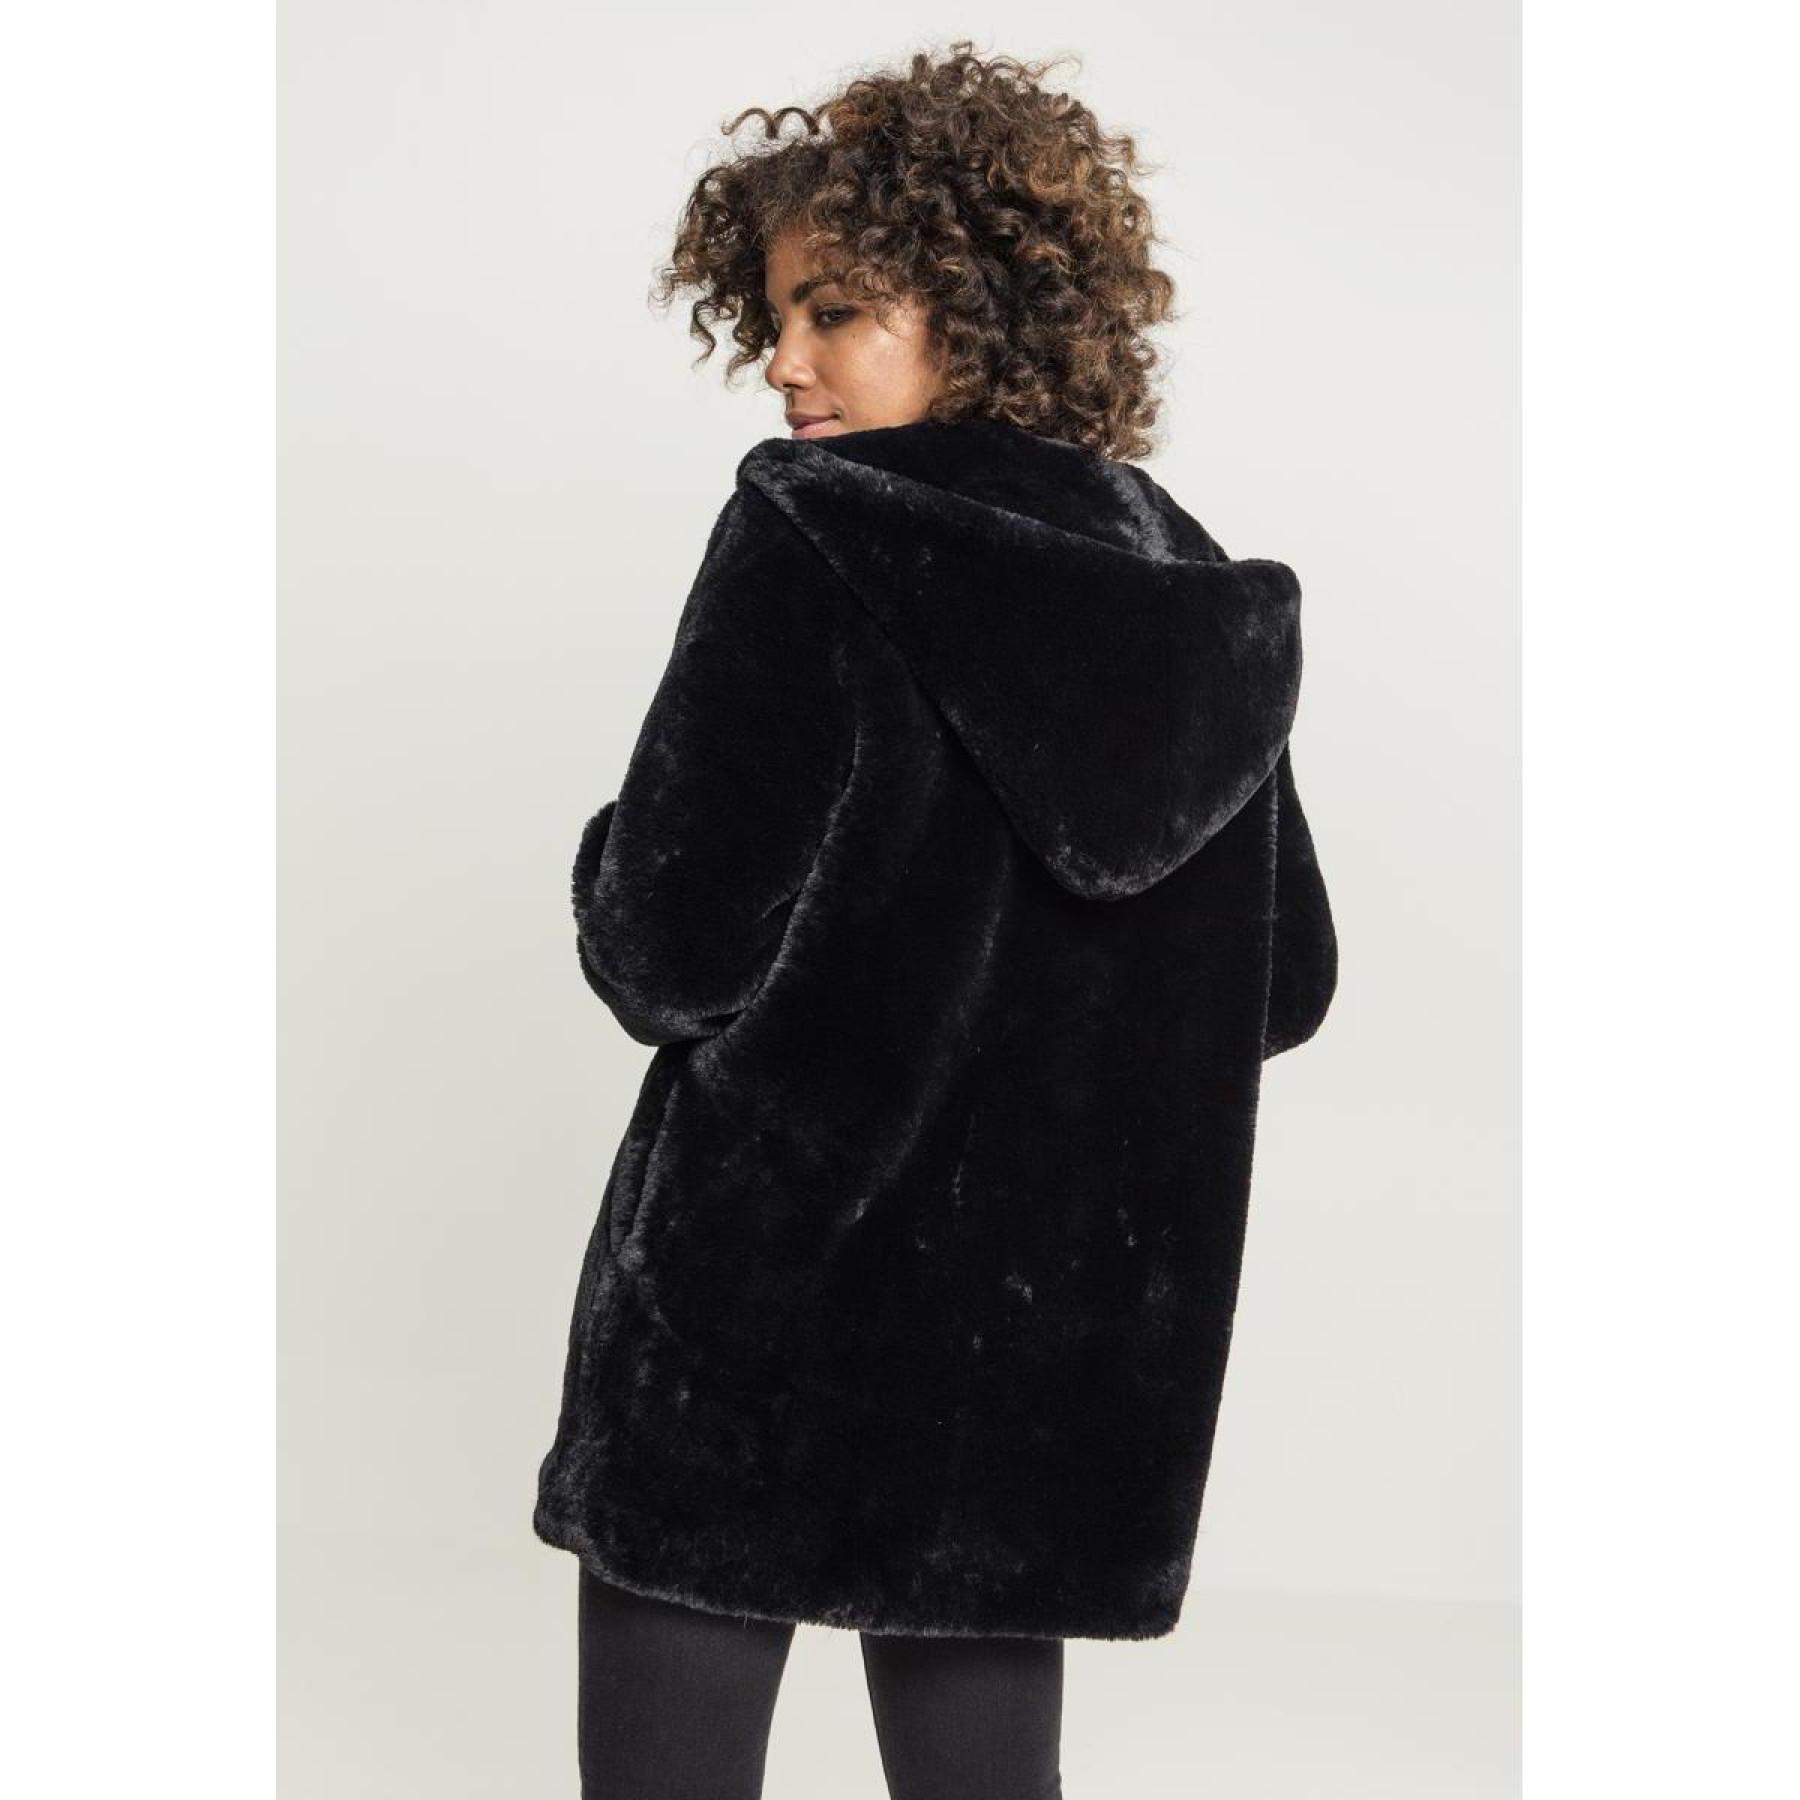 Women's Urban Classic hooded teddy coat